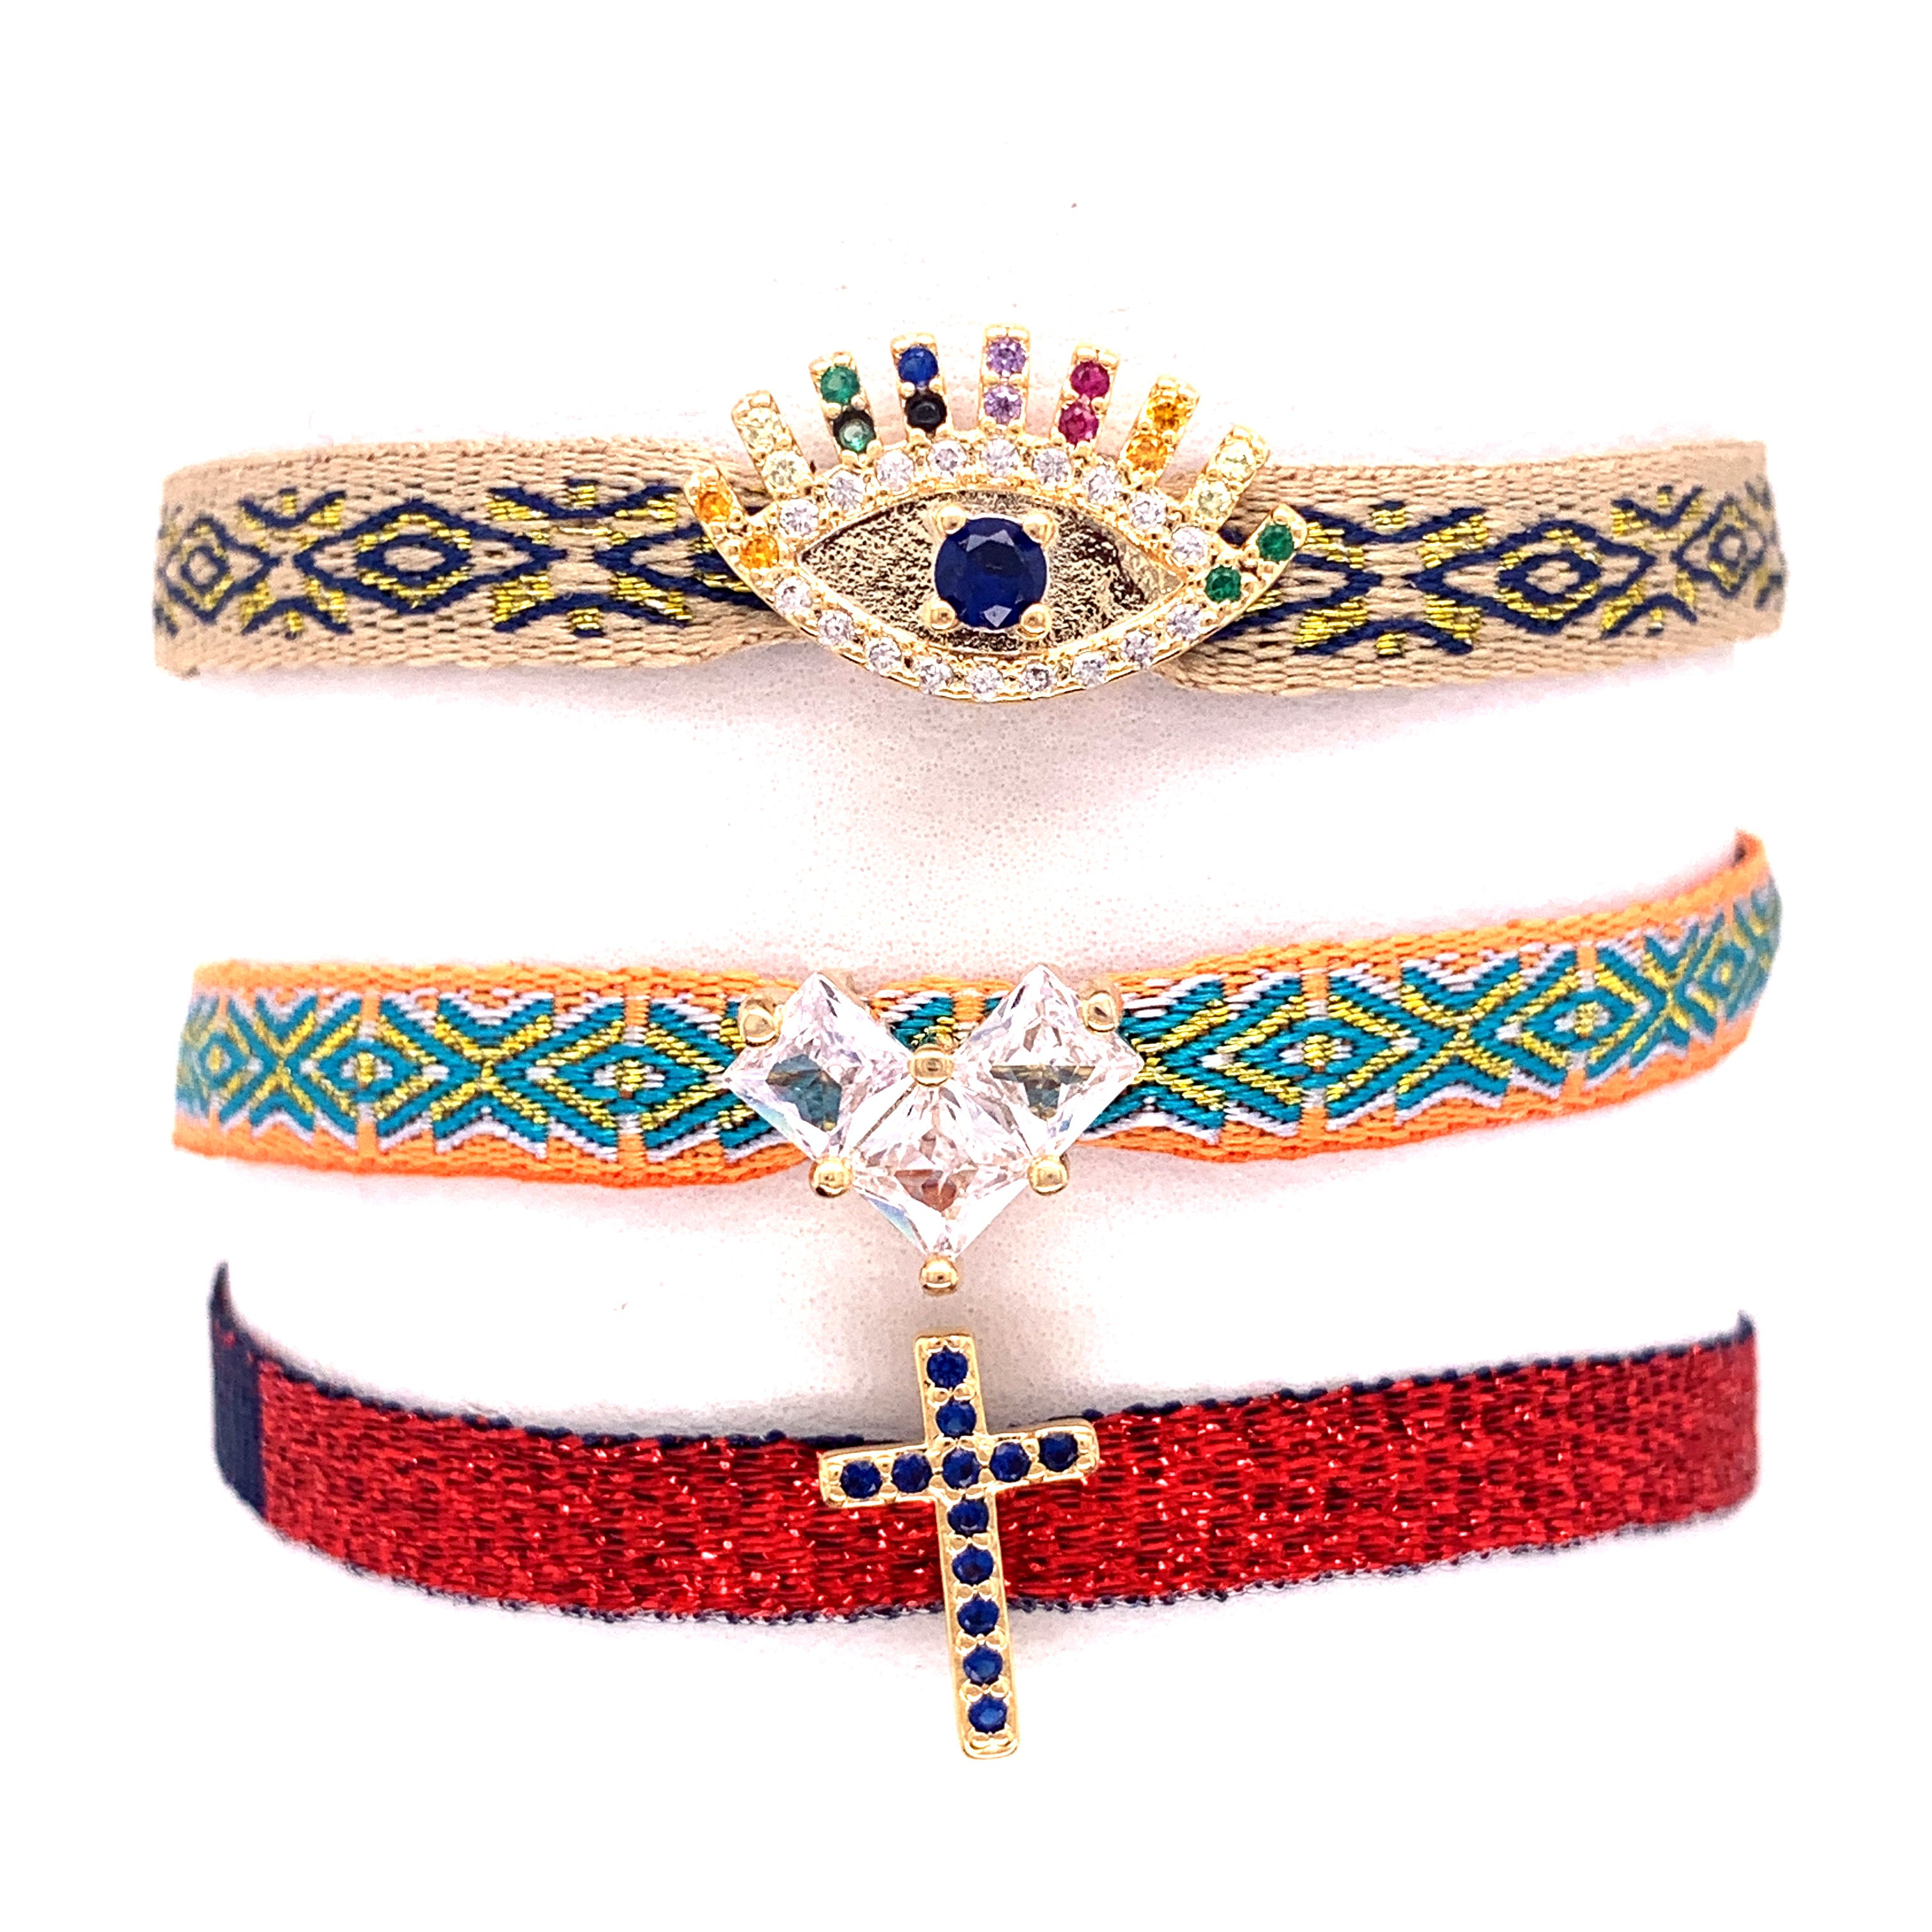 Multicolored Macrame Friendship Bracelet Made in Guatemala - Multicolored  Harmony | NOVICA